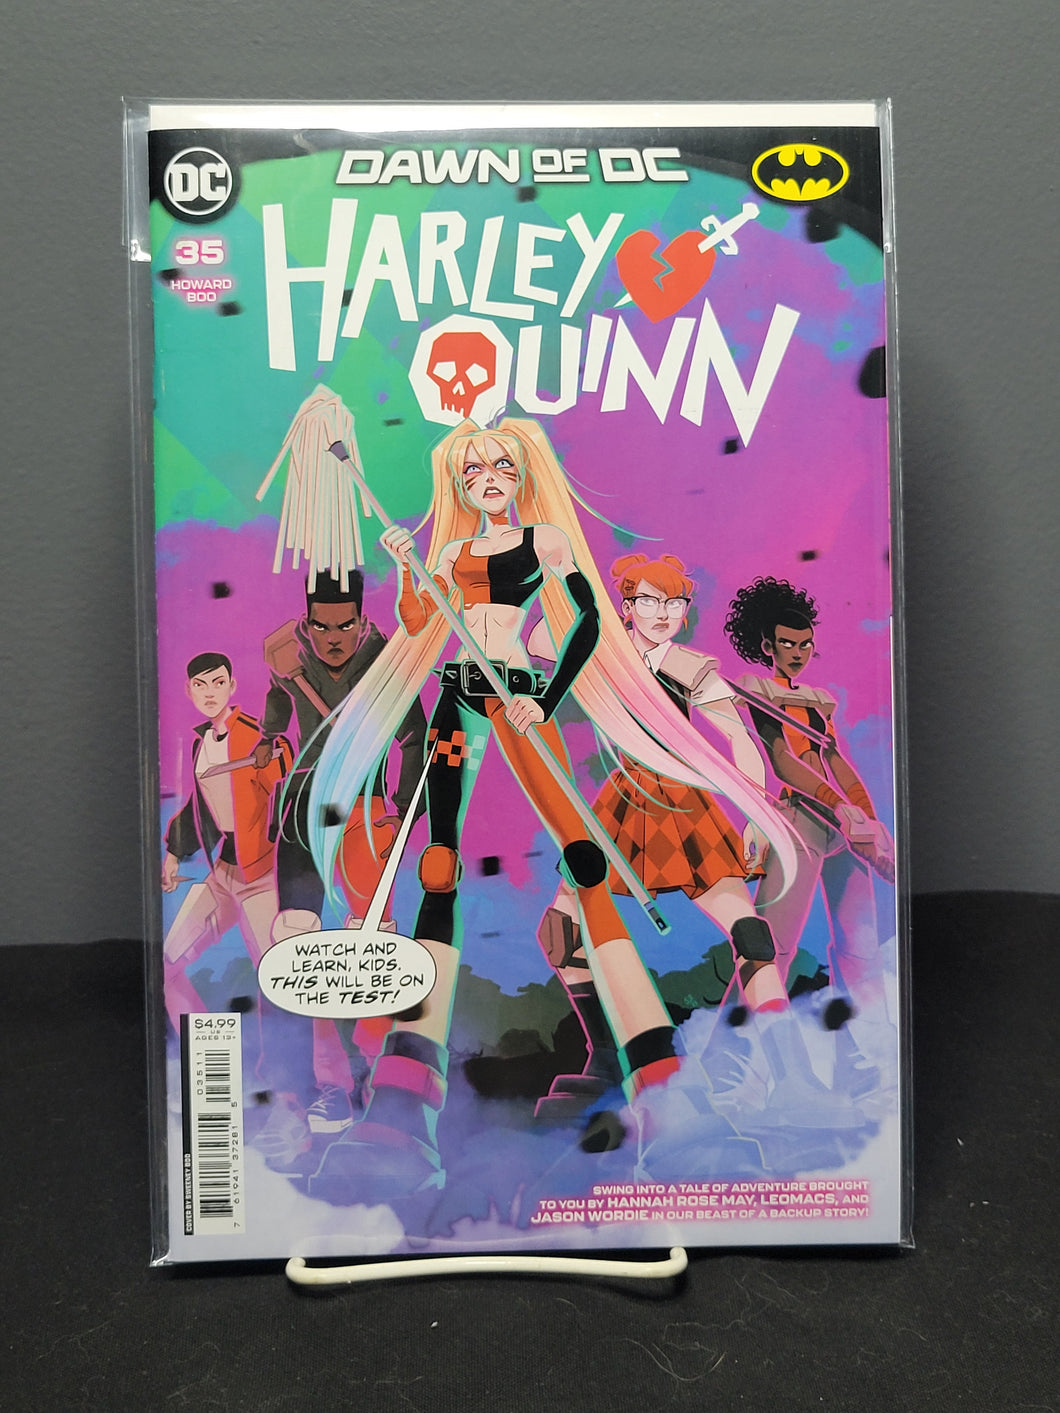 Harley Quinn #35